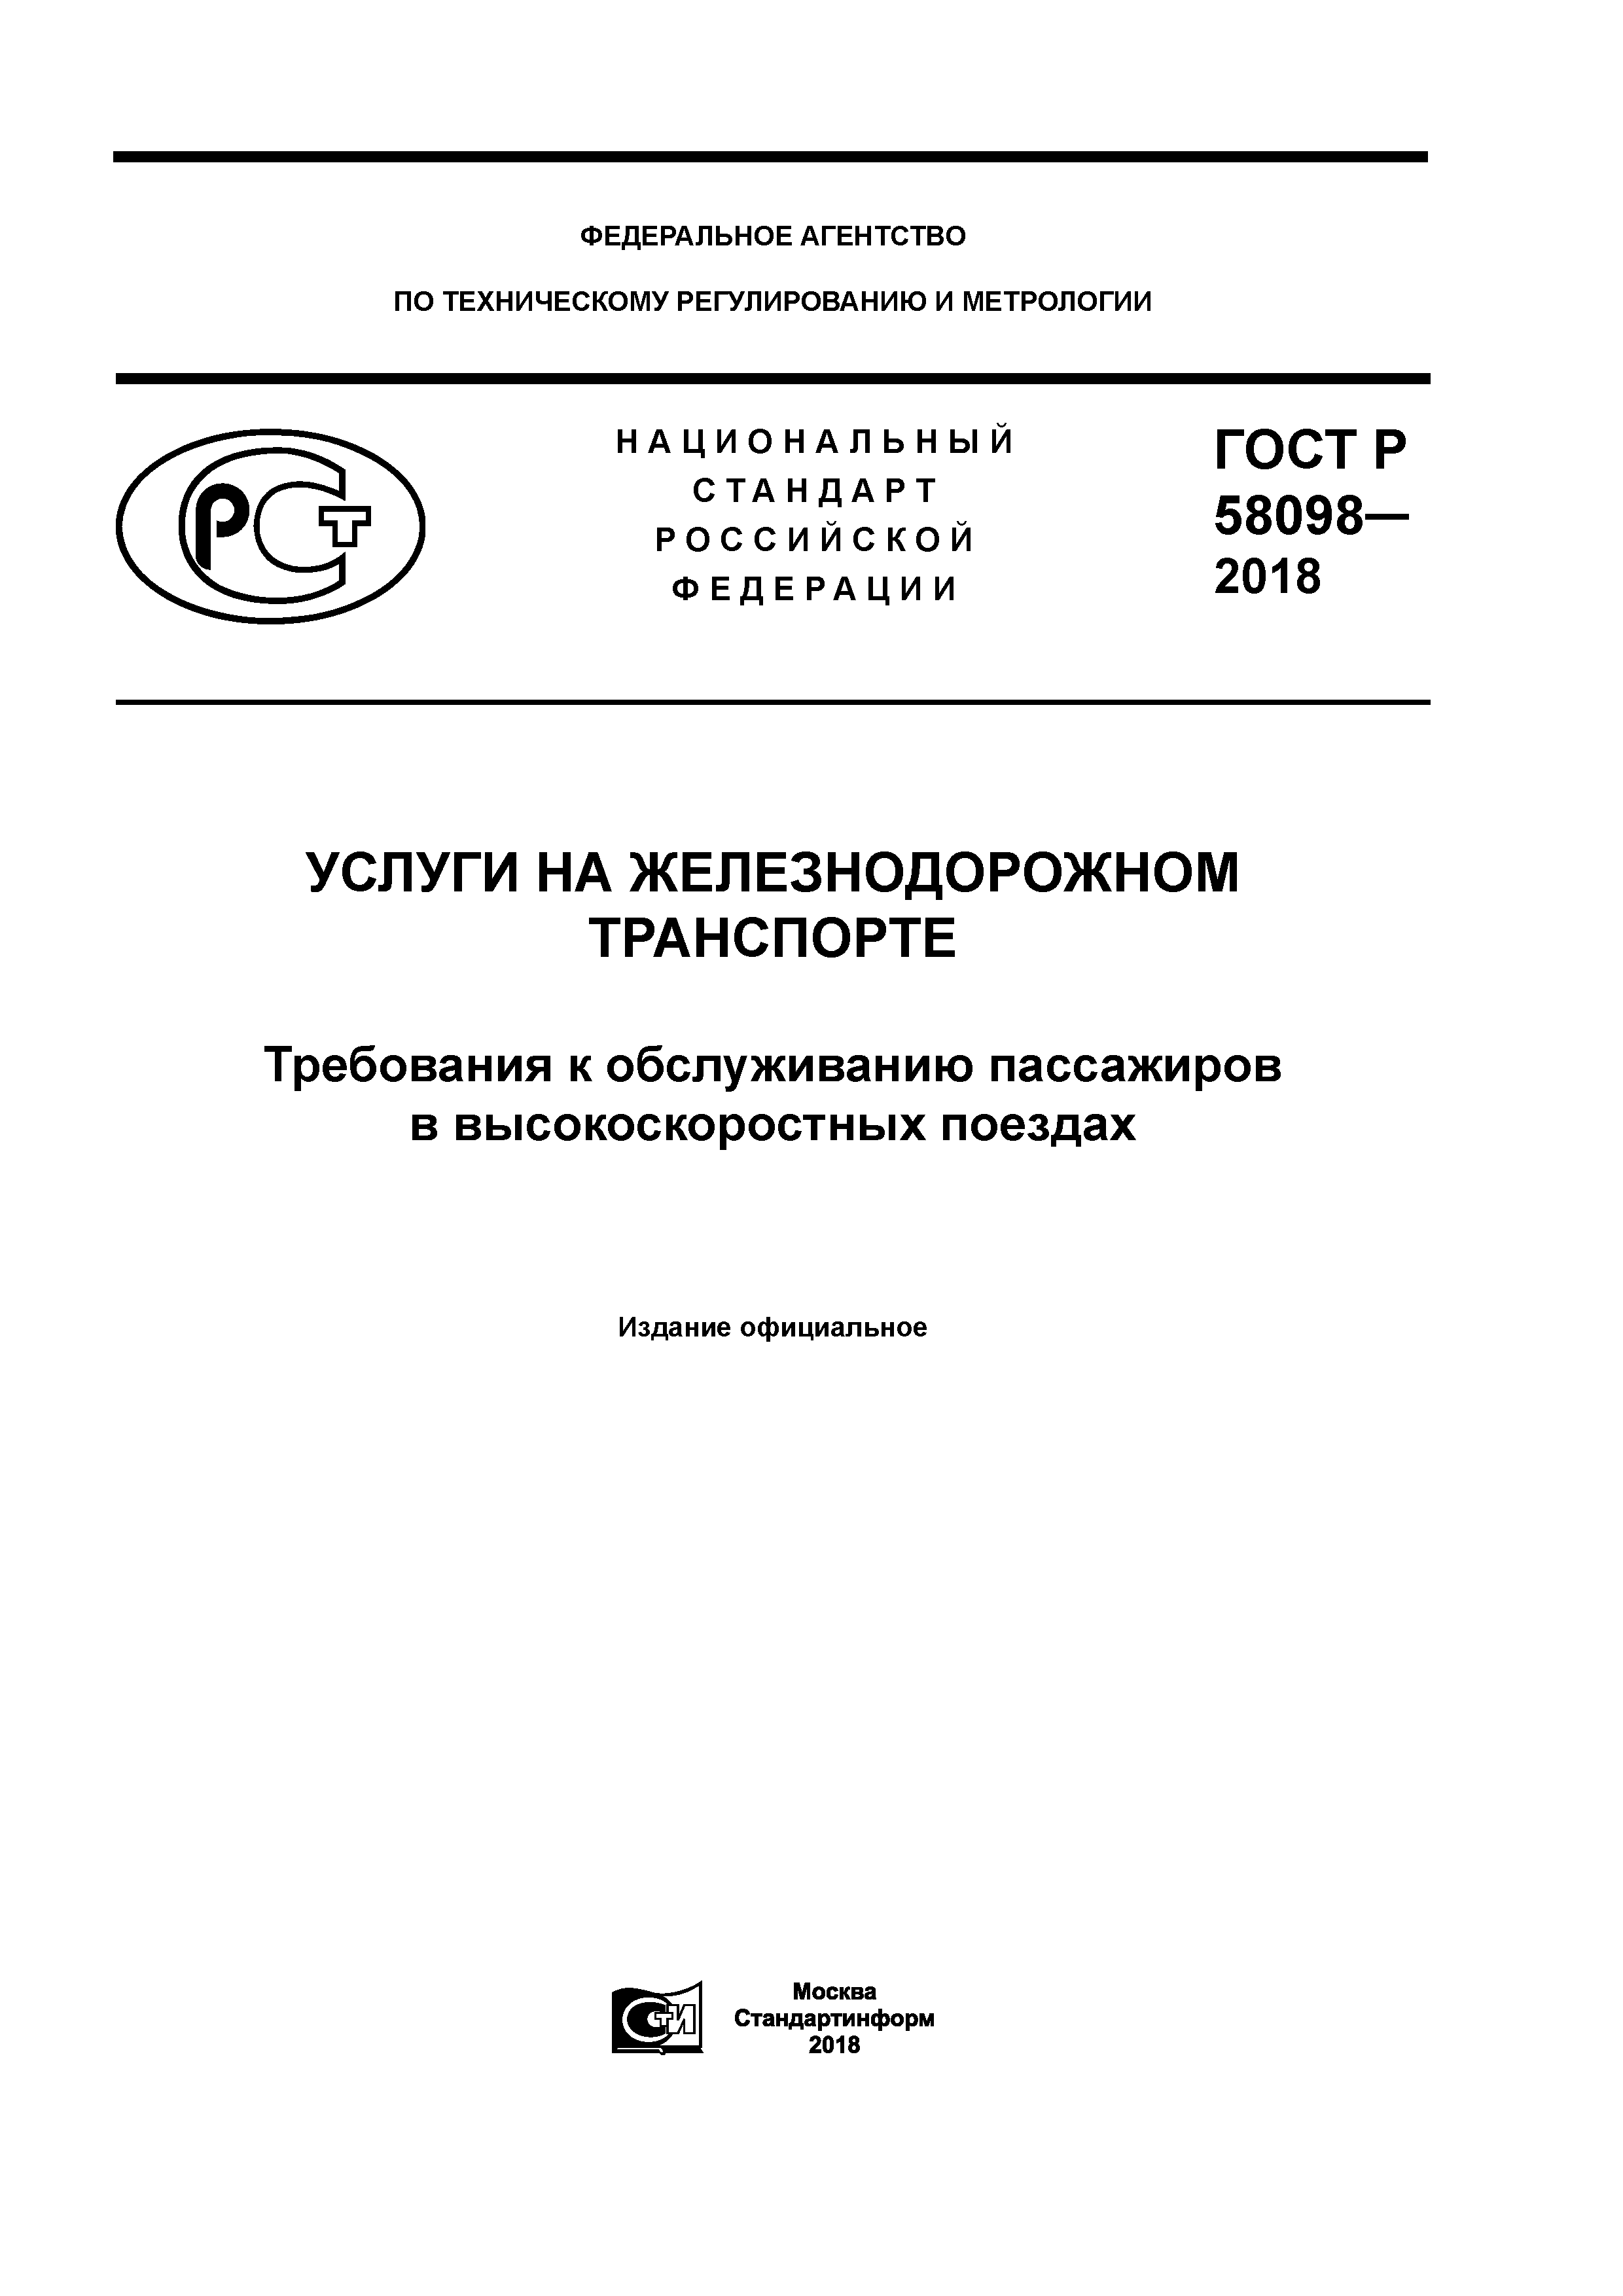 ГОСТ Р 58098-2018